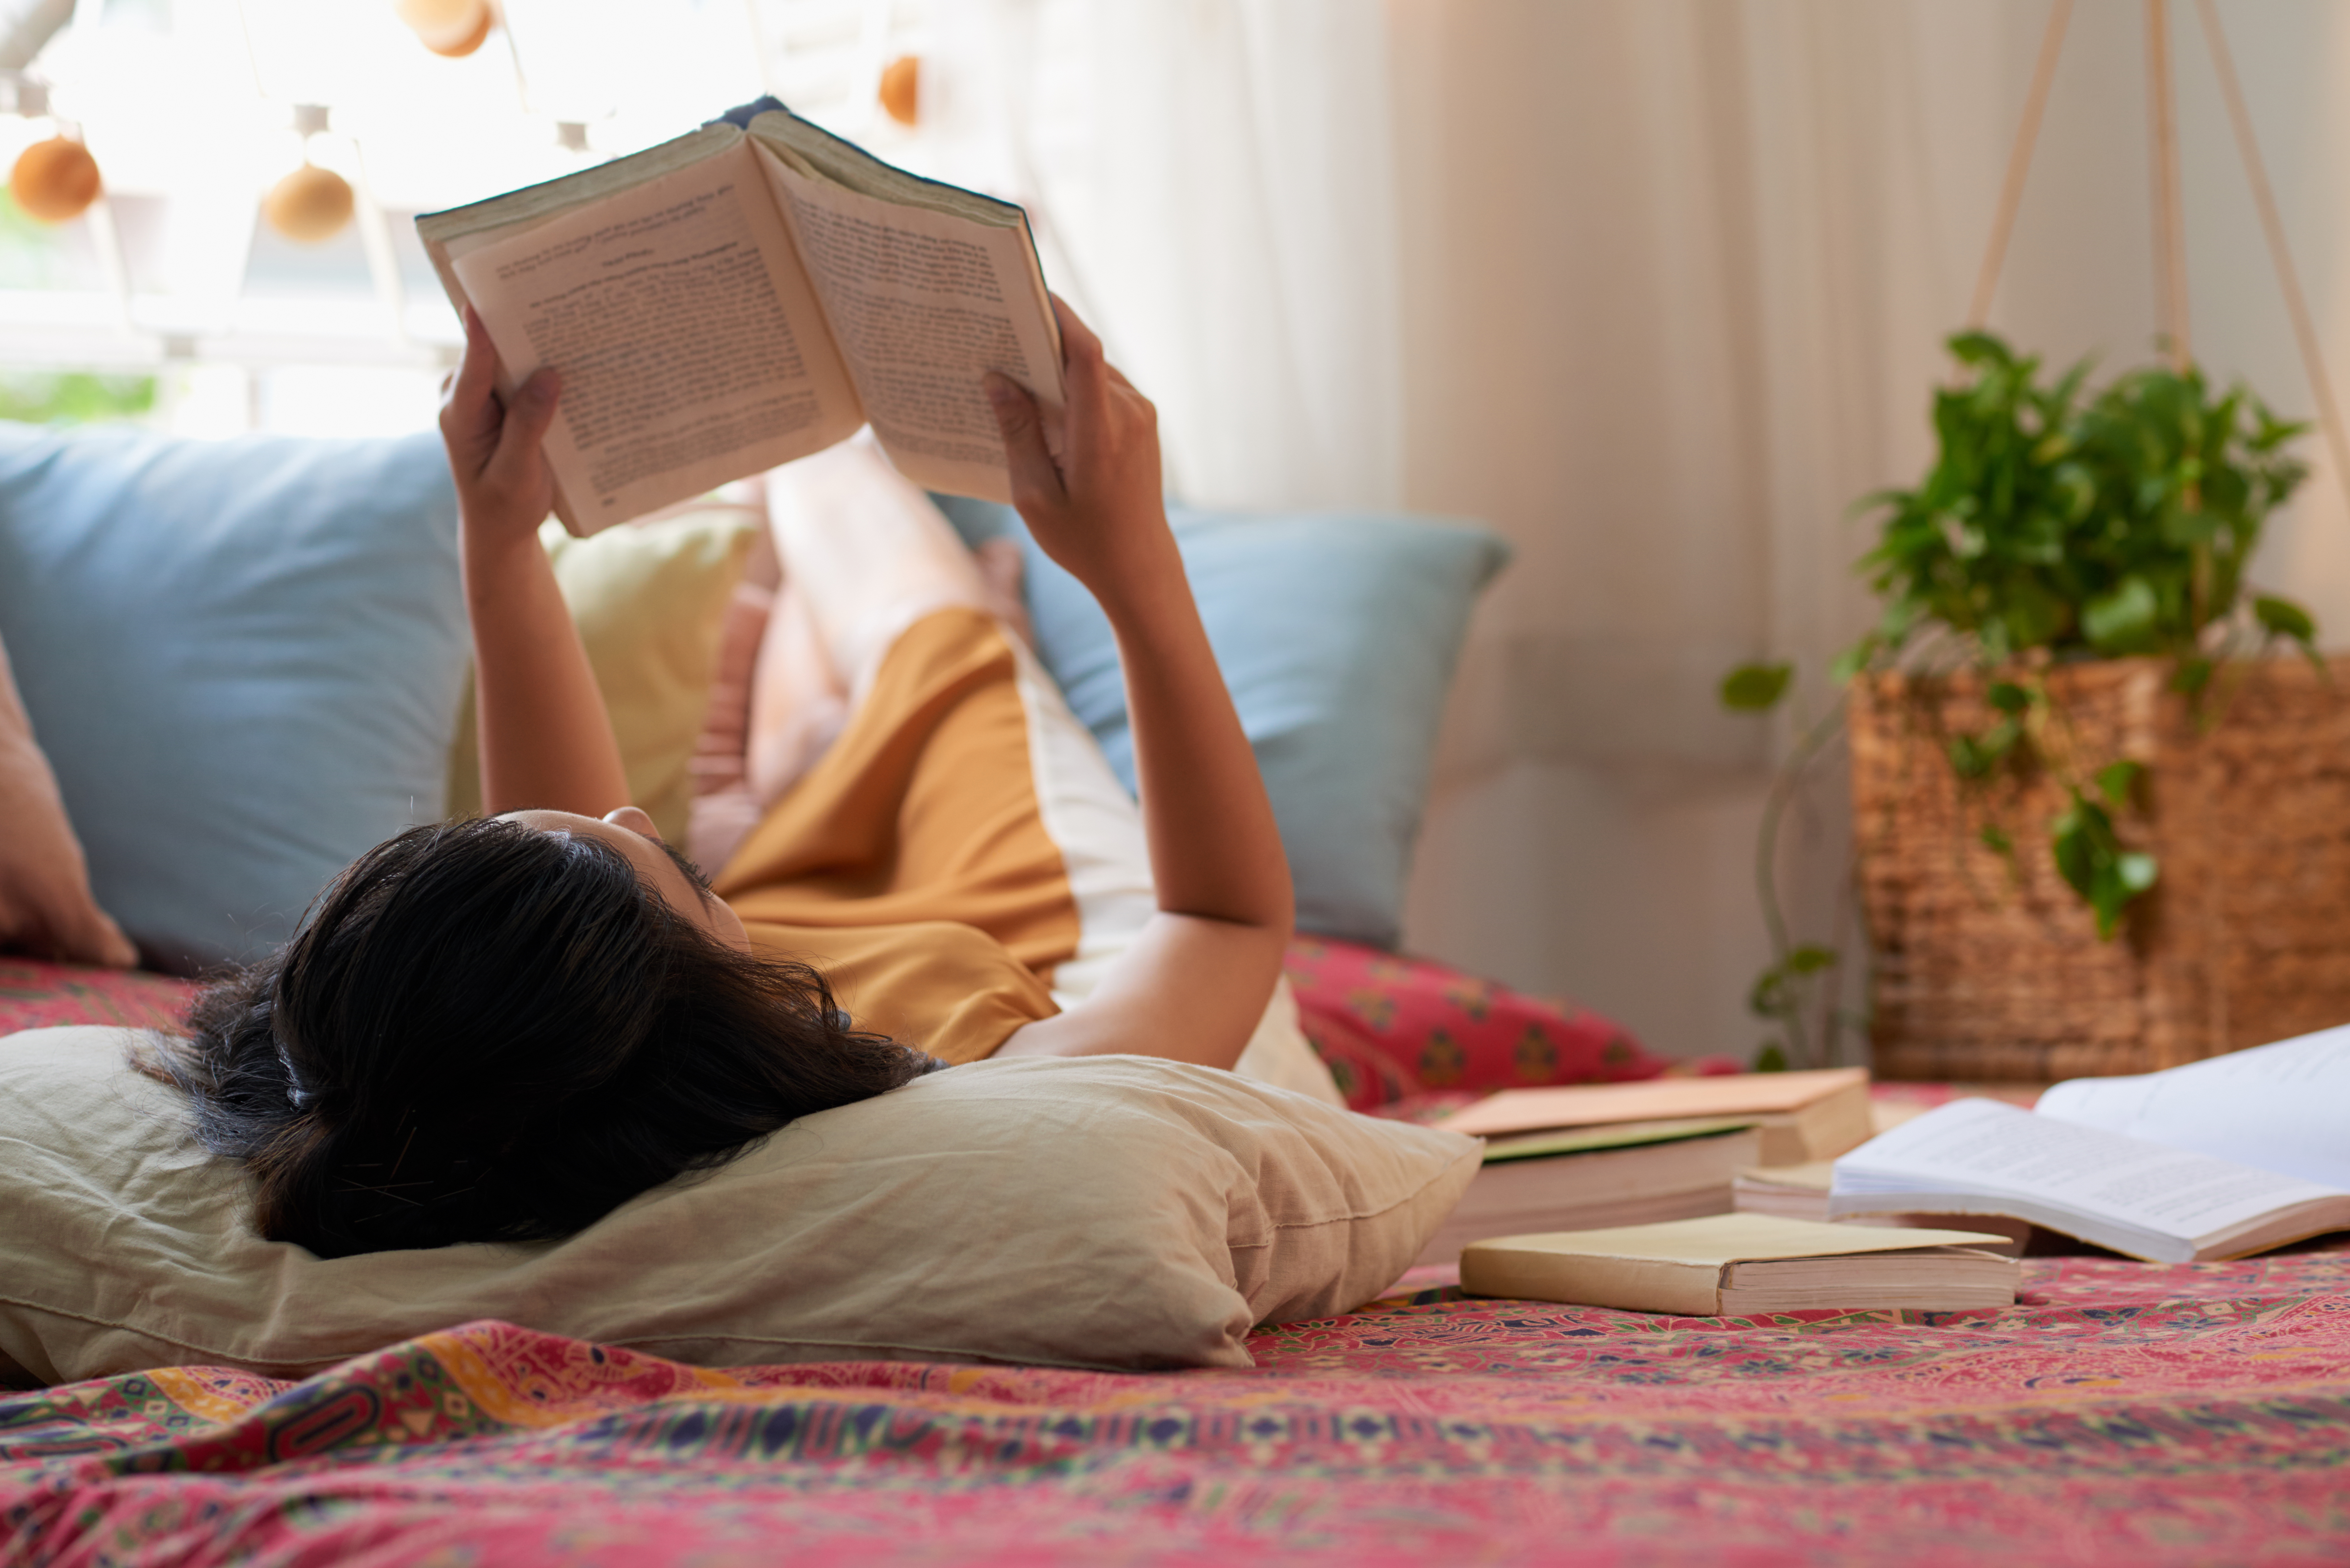 She reads in the evening. Чтение в кровати. Чтение книг. Чтение книги в кровати. Книги лежат на кровати.